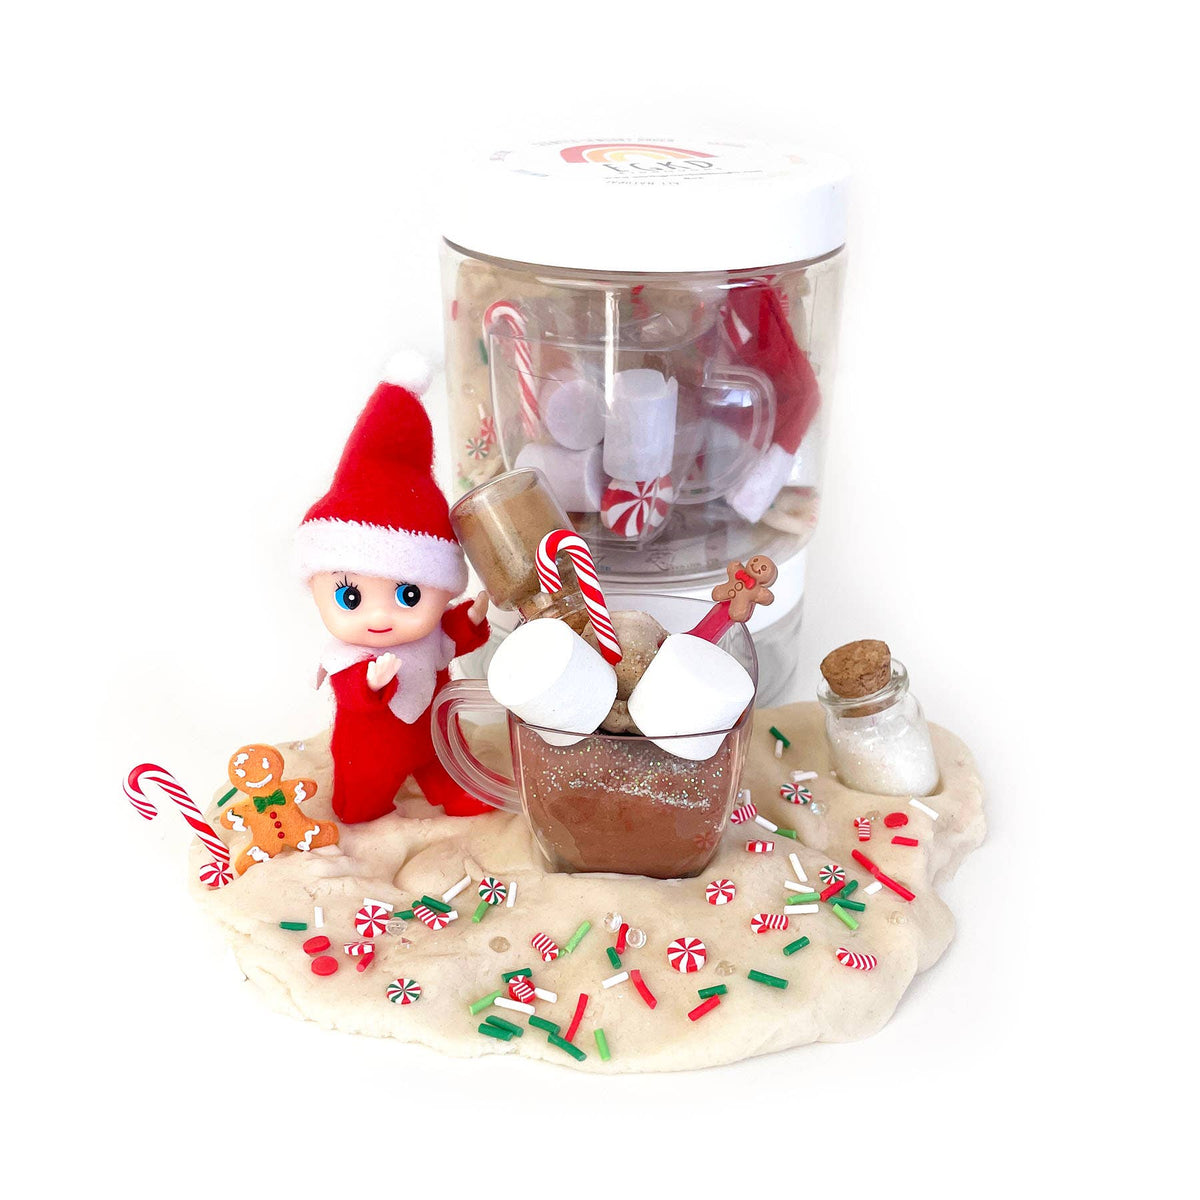 Elf in the Jar Sensory Play Dough Kit